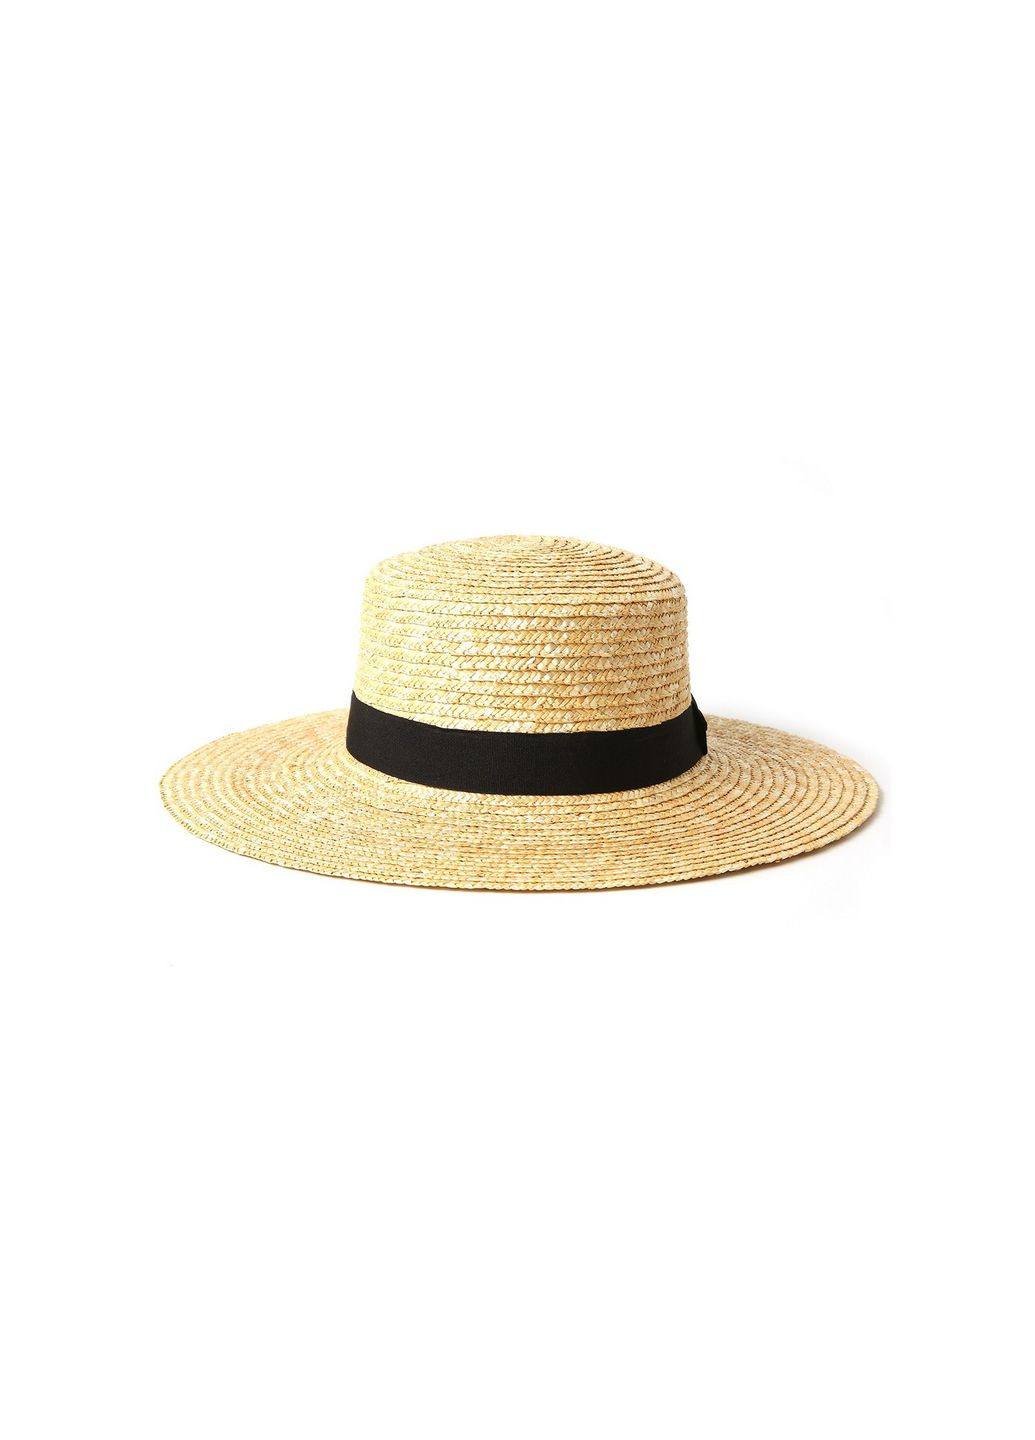 Шляпа канотье мужская солома желтая DOROTHY 844-163 LuckyLOOK 844-163м (289478355)